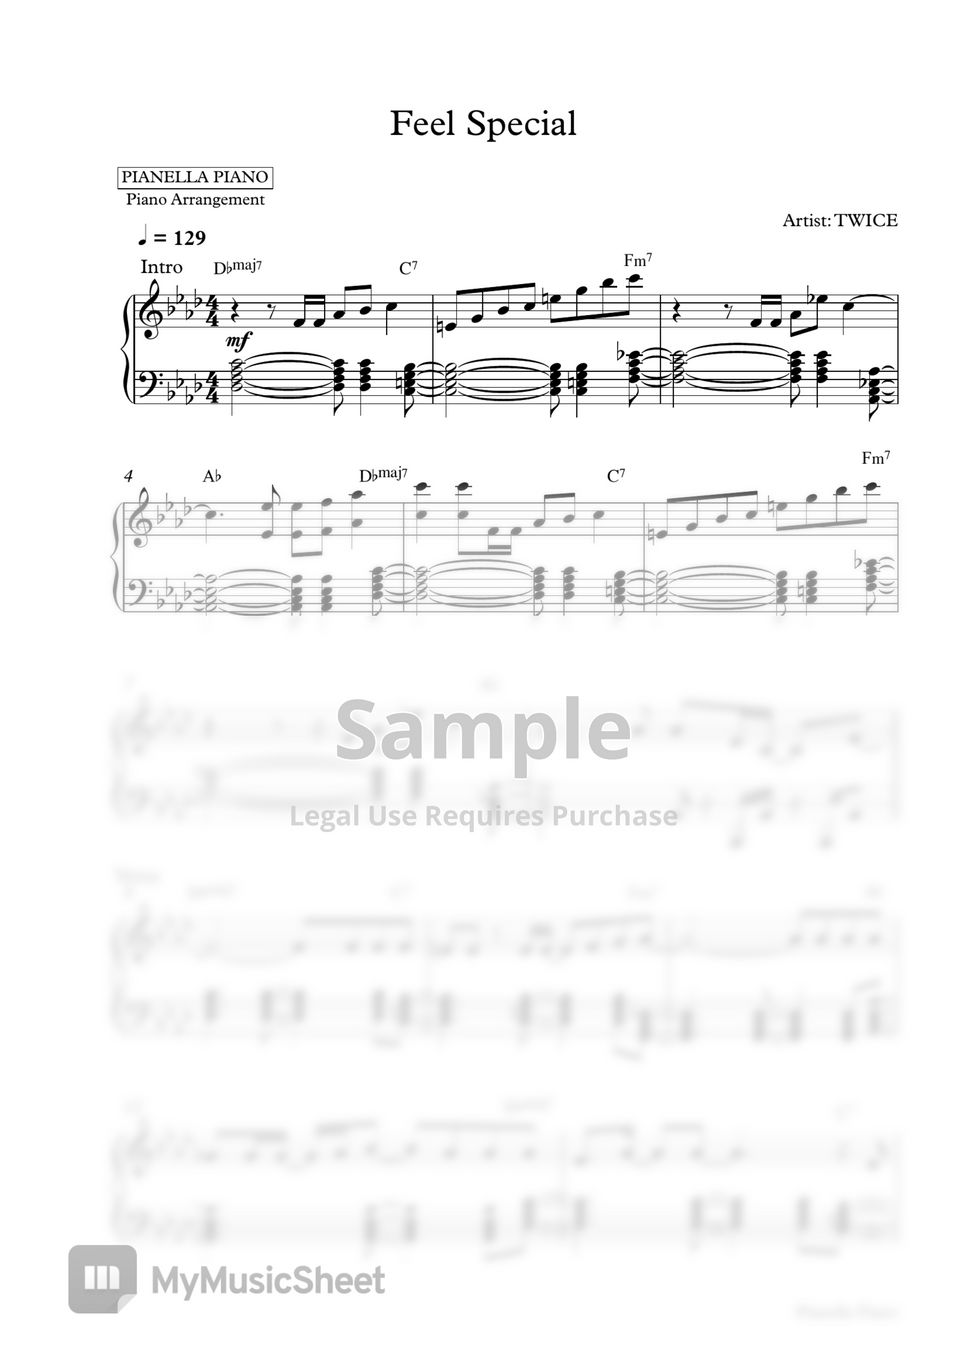 Twice (트와이스) - Feel Special (Piano Sheet) by Pianella Piano